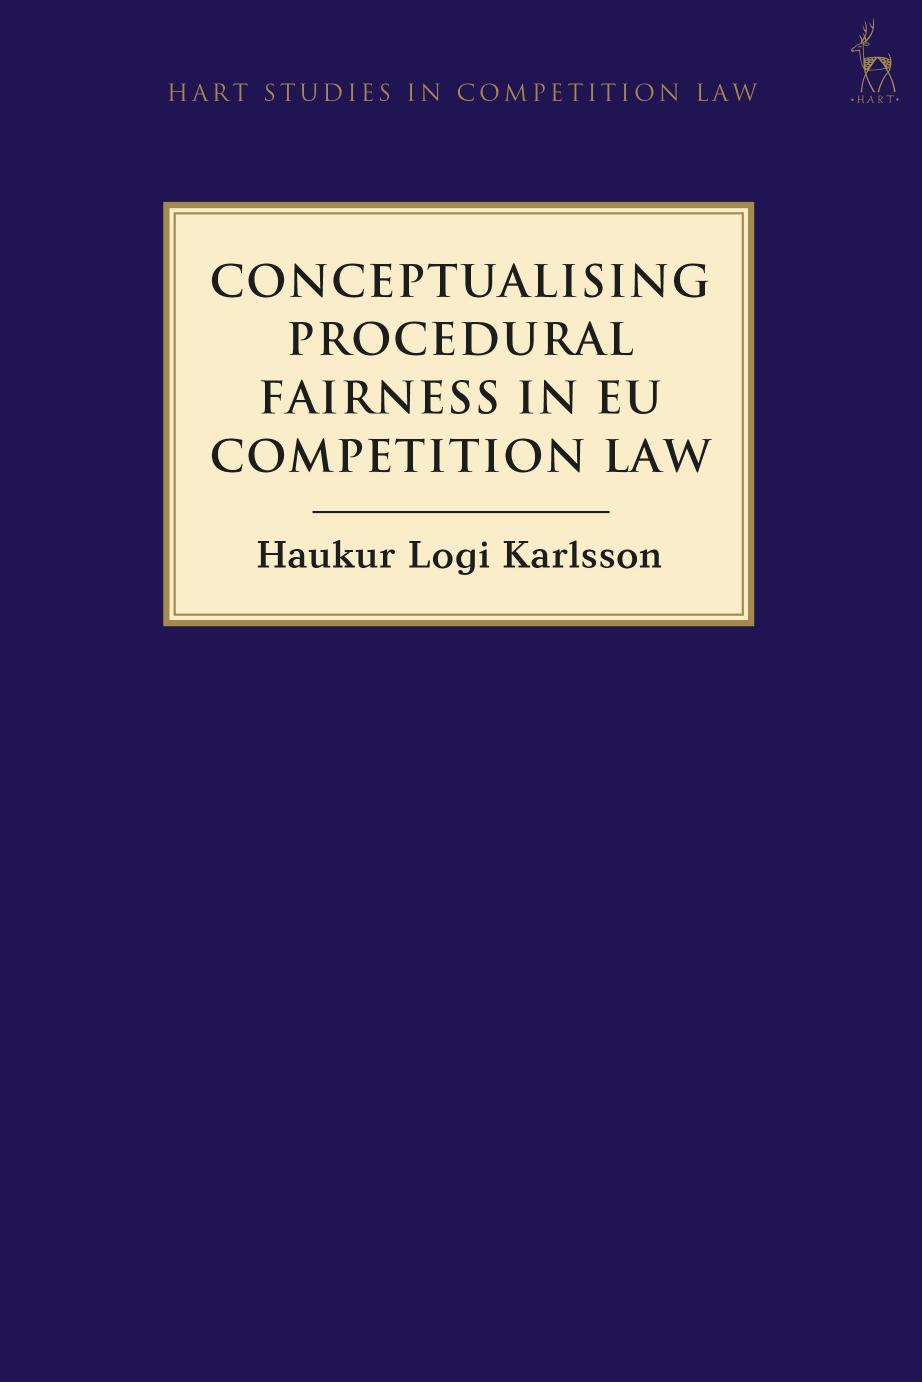 Conceptualising Procedural Fairness in EU Competition Law by Haukur Logi Karlsson